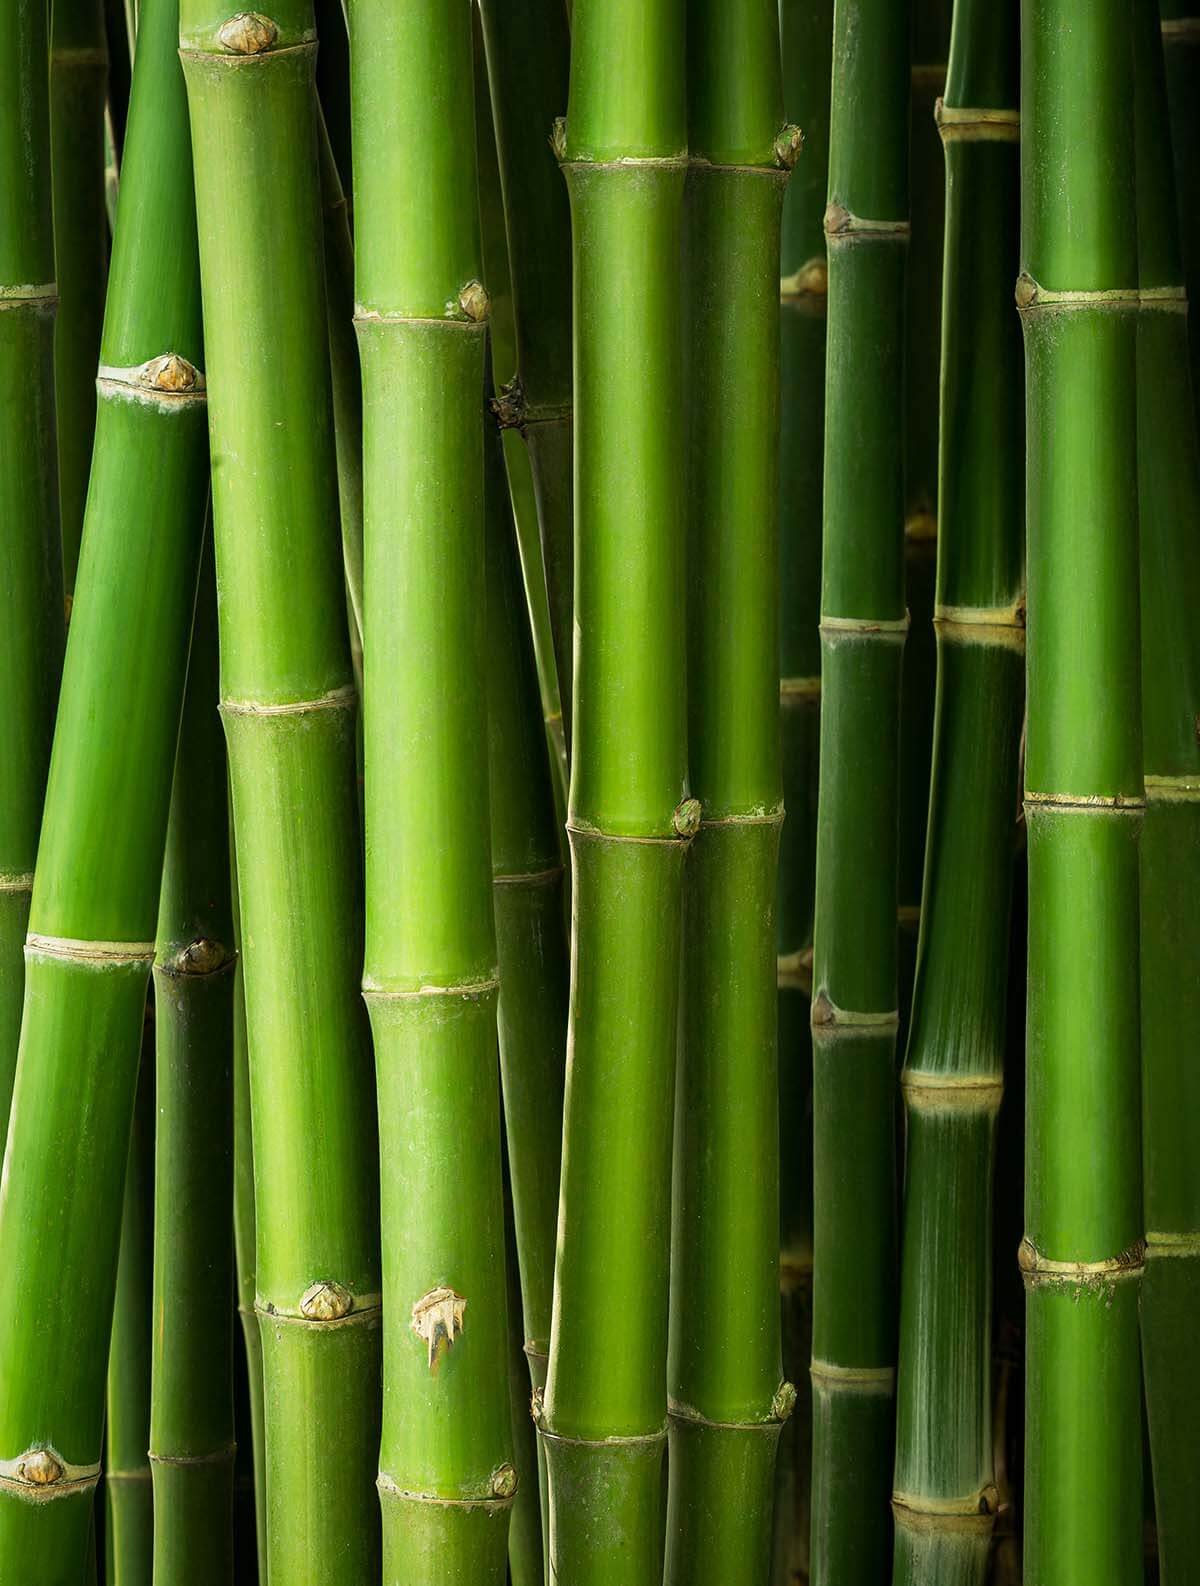 Bamboo in the wardrobe